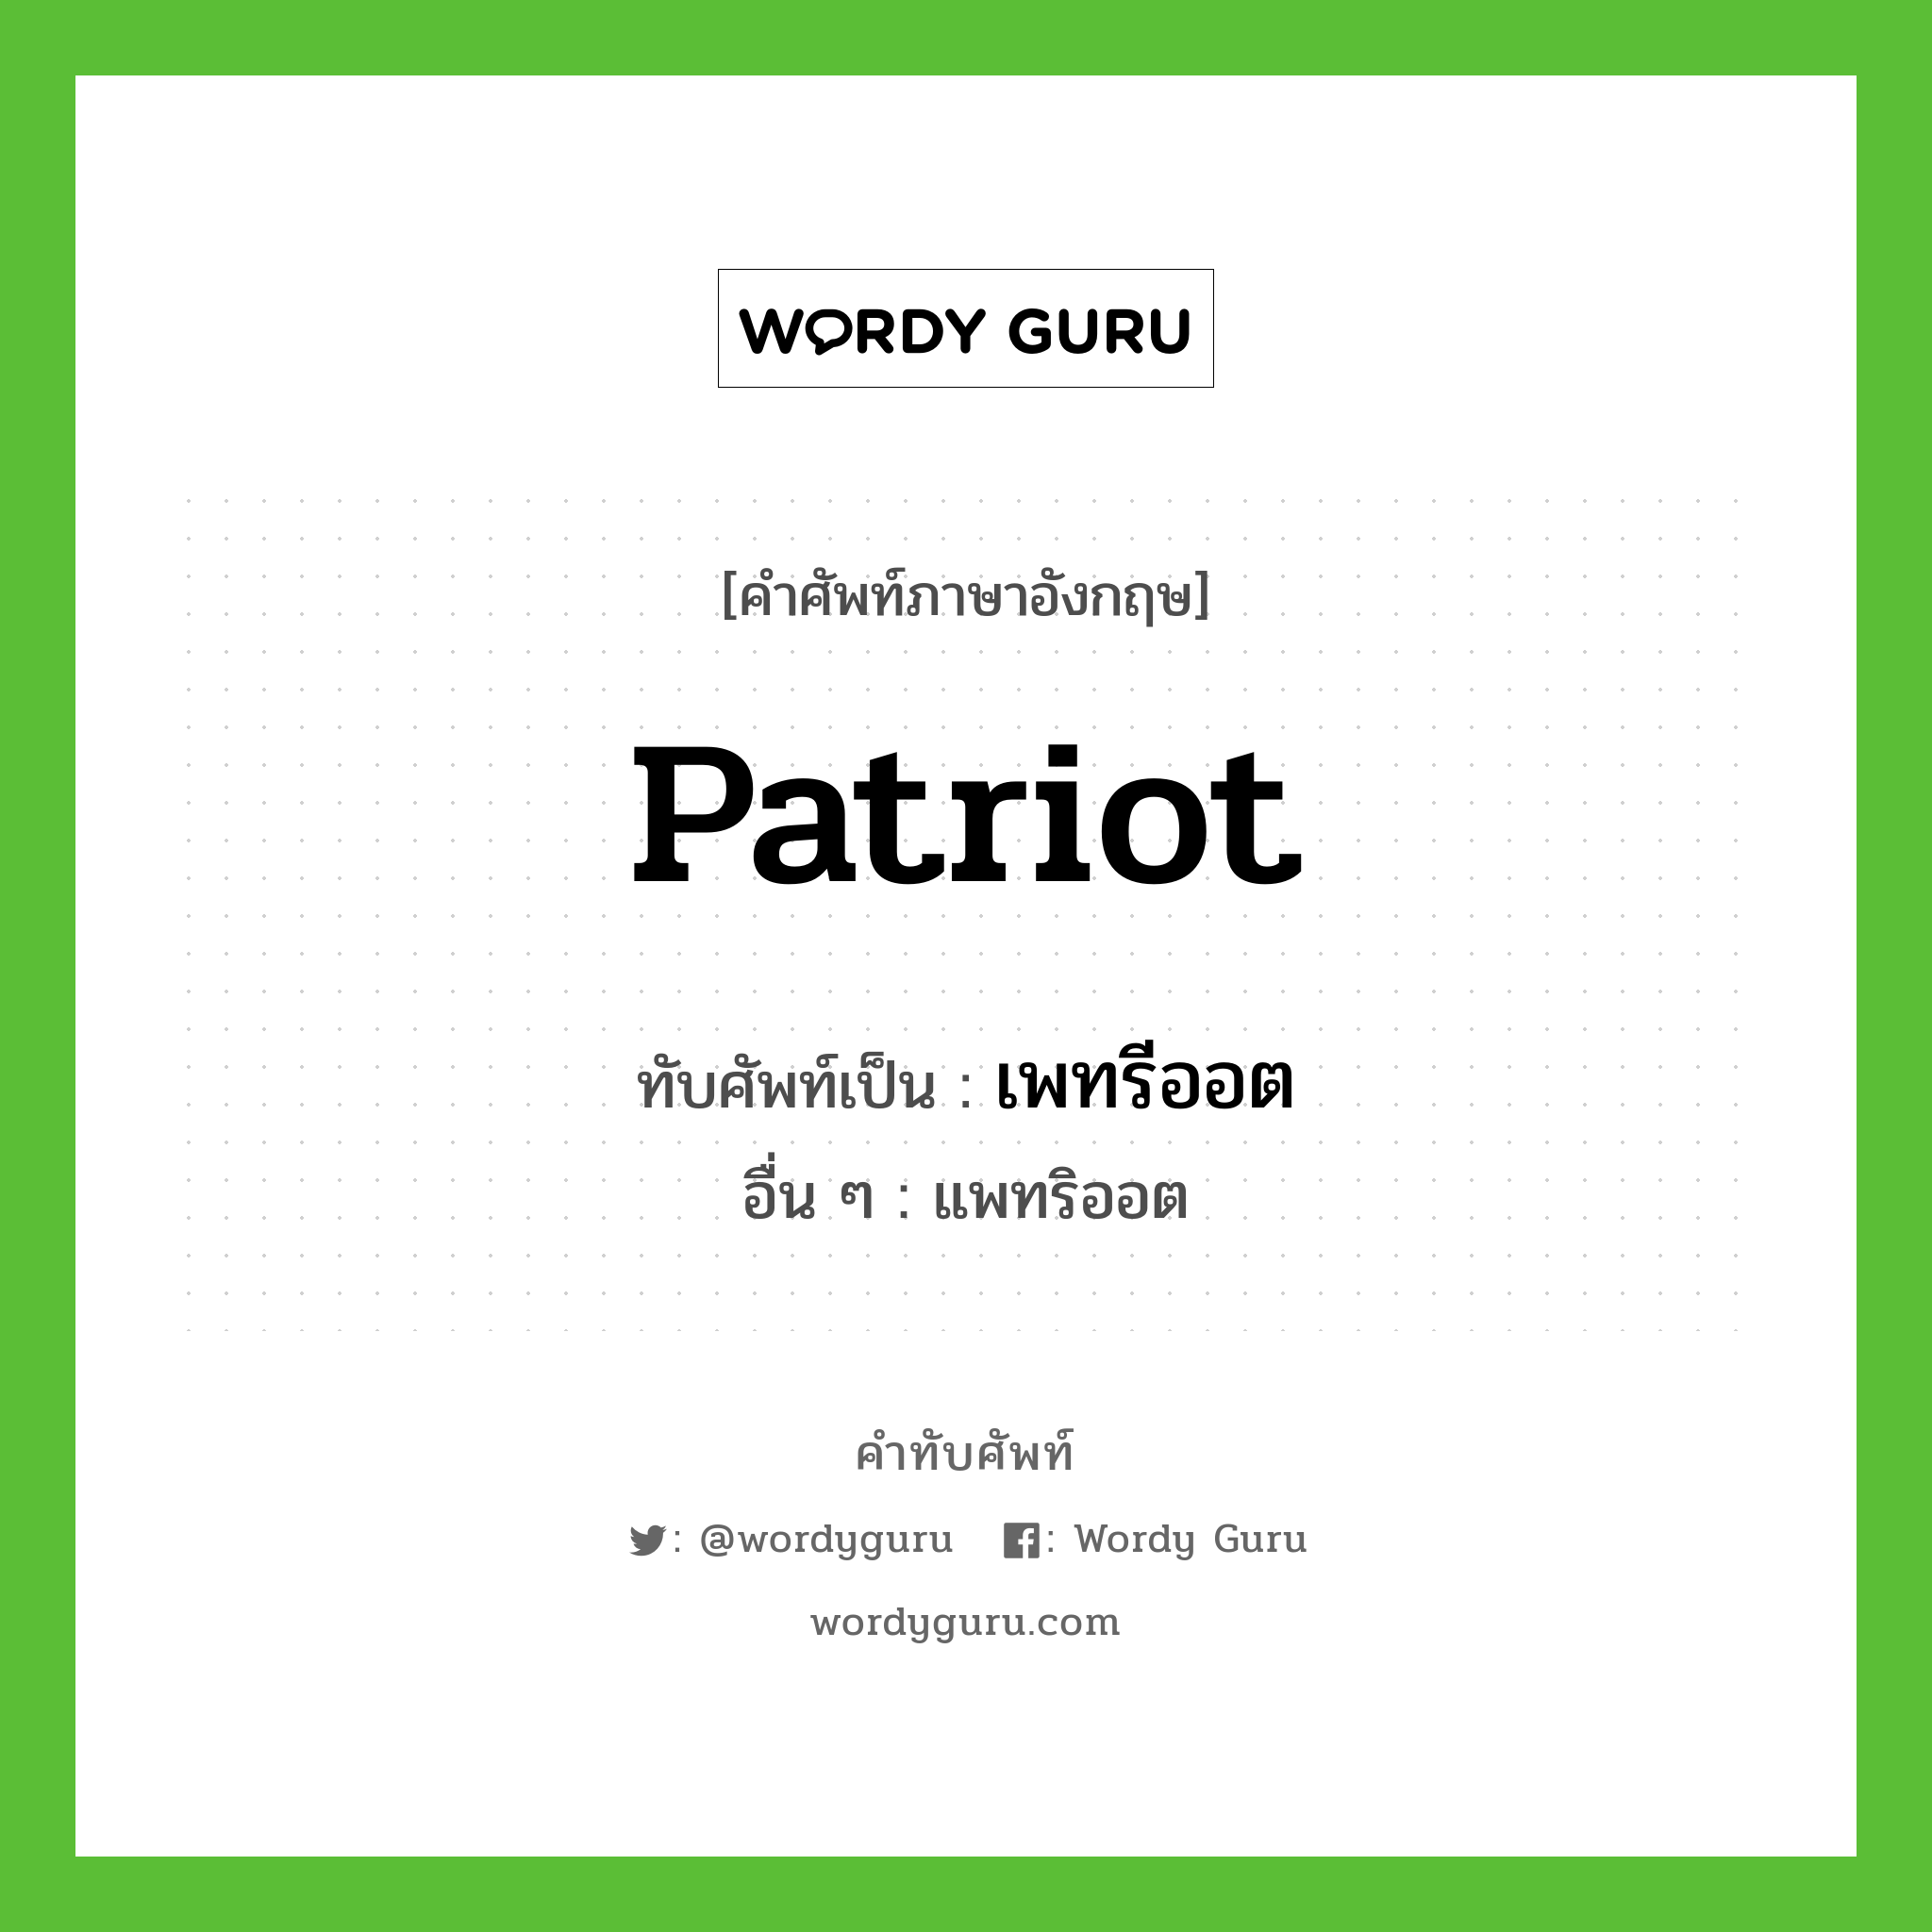 patriot เขียนเป็นคำไทยว่าอะไร?, คำศัพท์ภาษาอังกฤษ patriot ทับศัพท์เป็น เพทรีออต อื่น ๆ แพทริออต